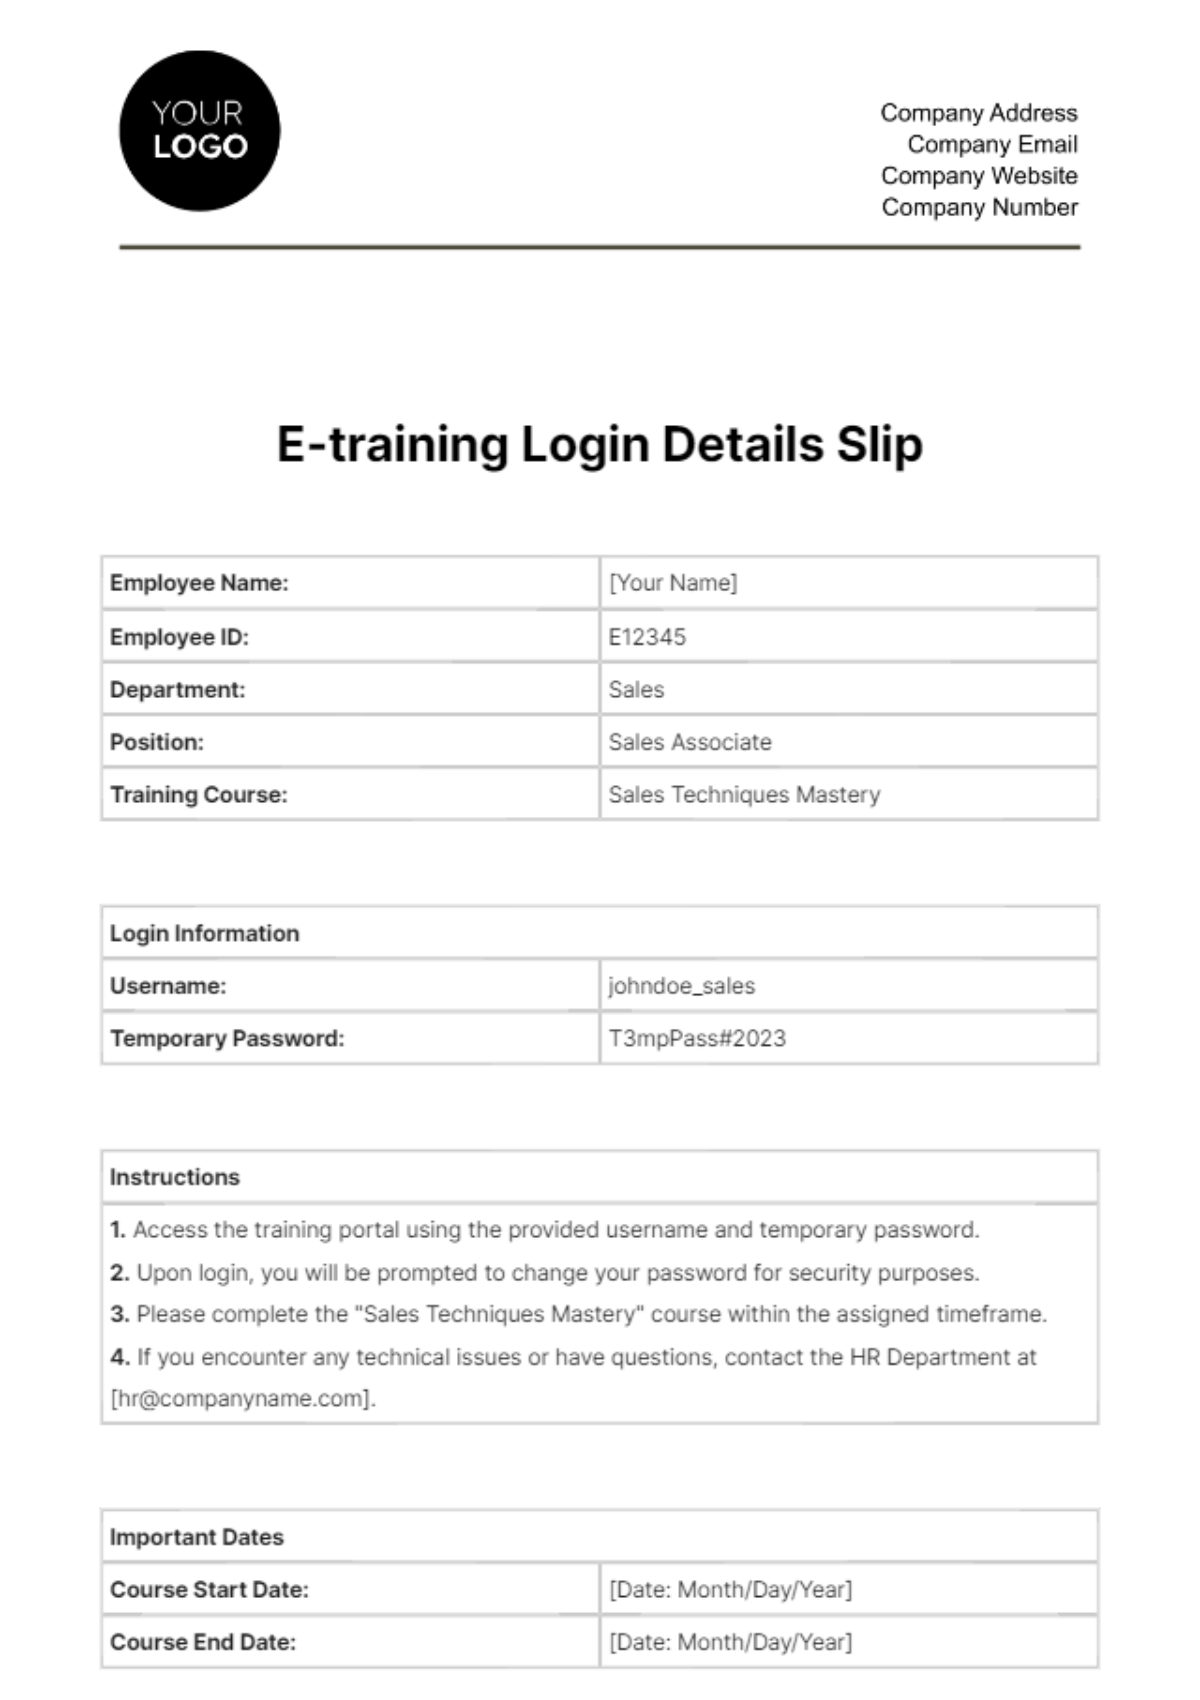 E-training Login Details Slip HR Template